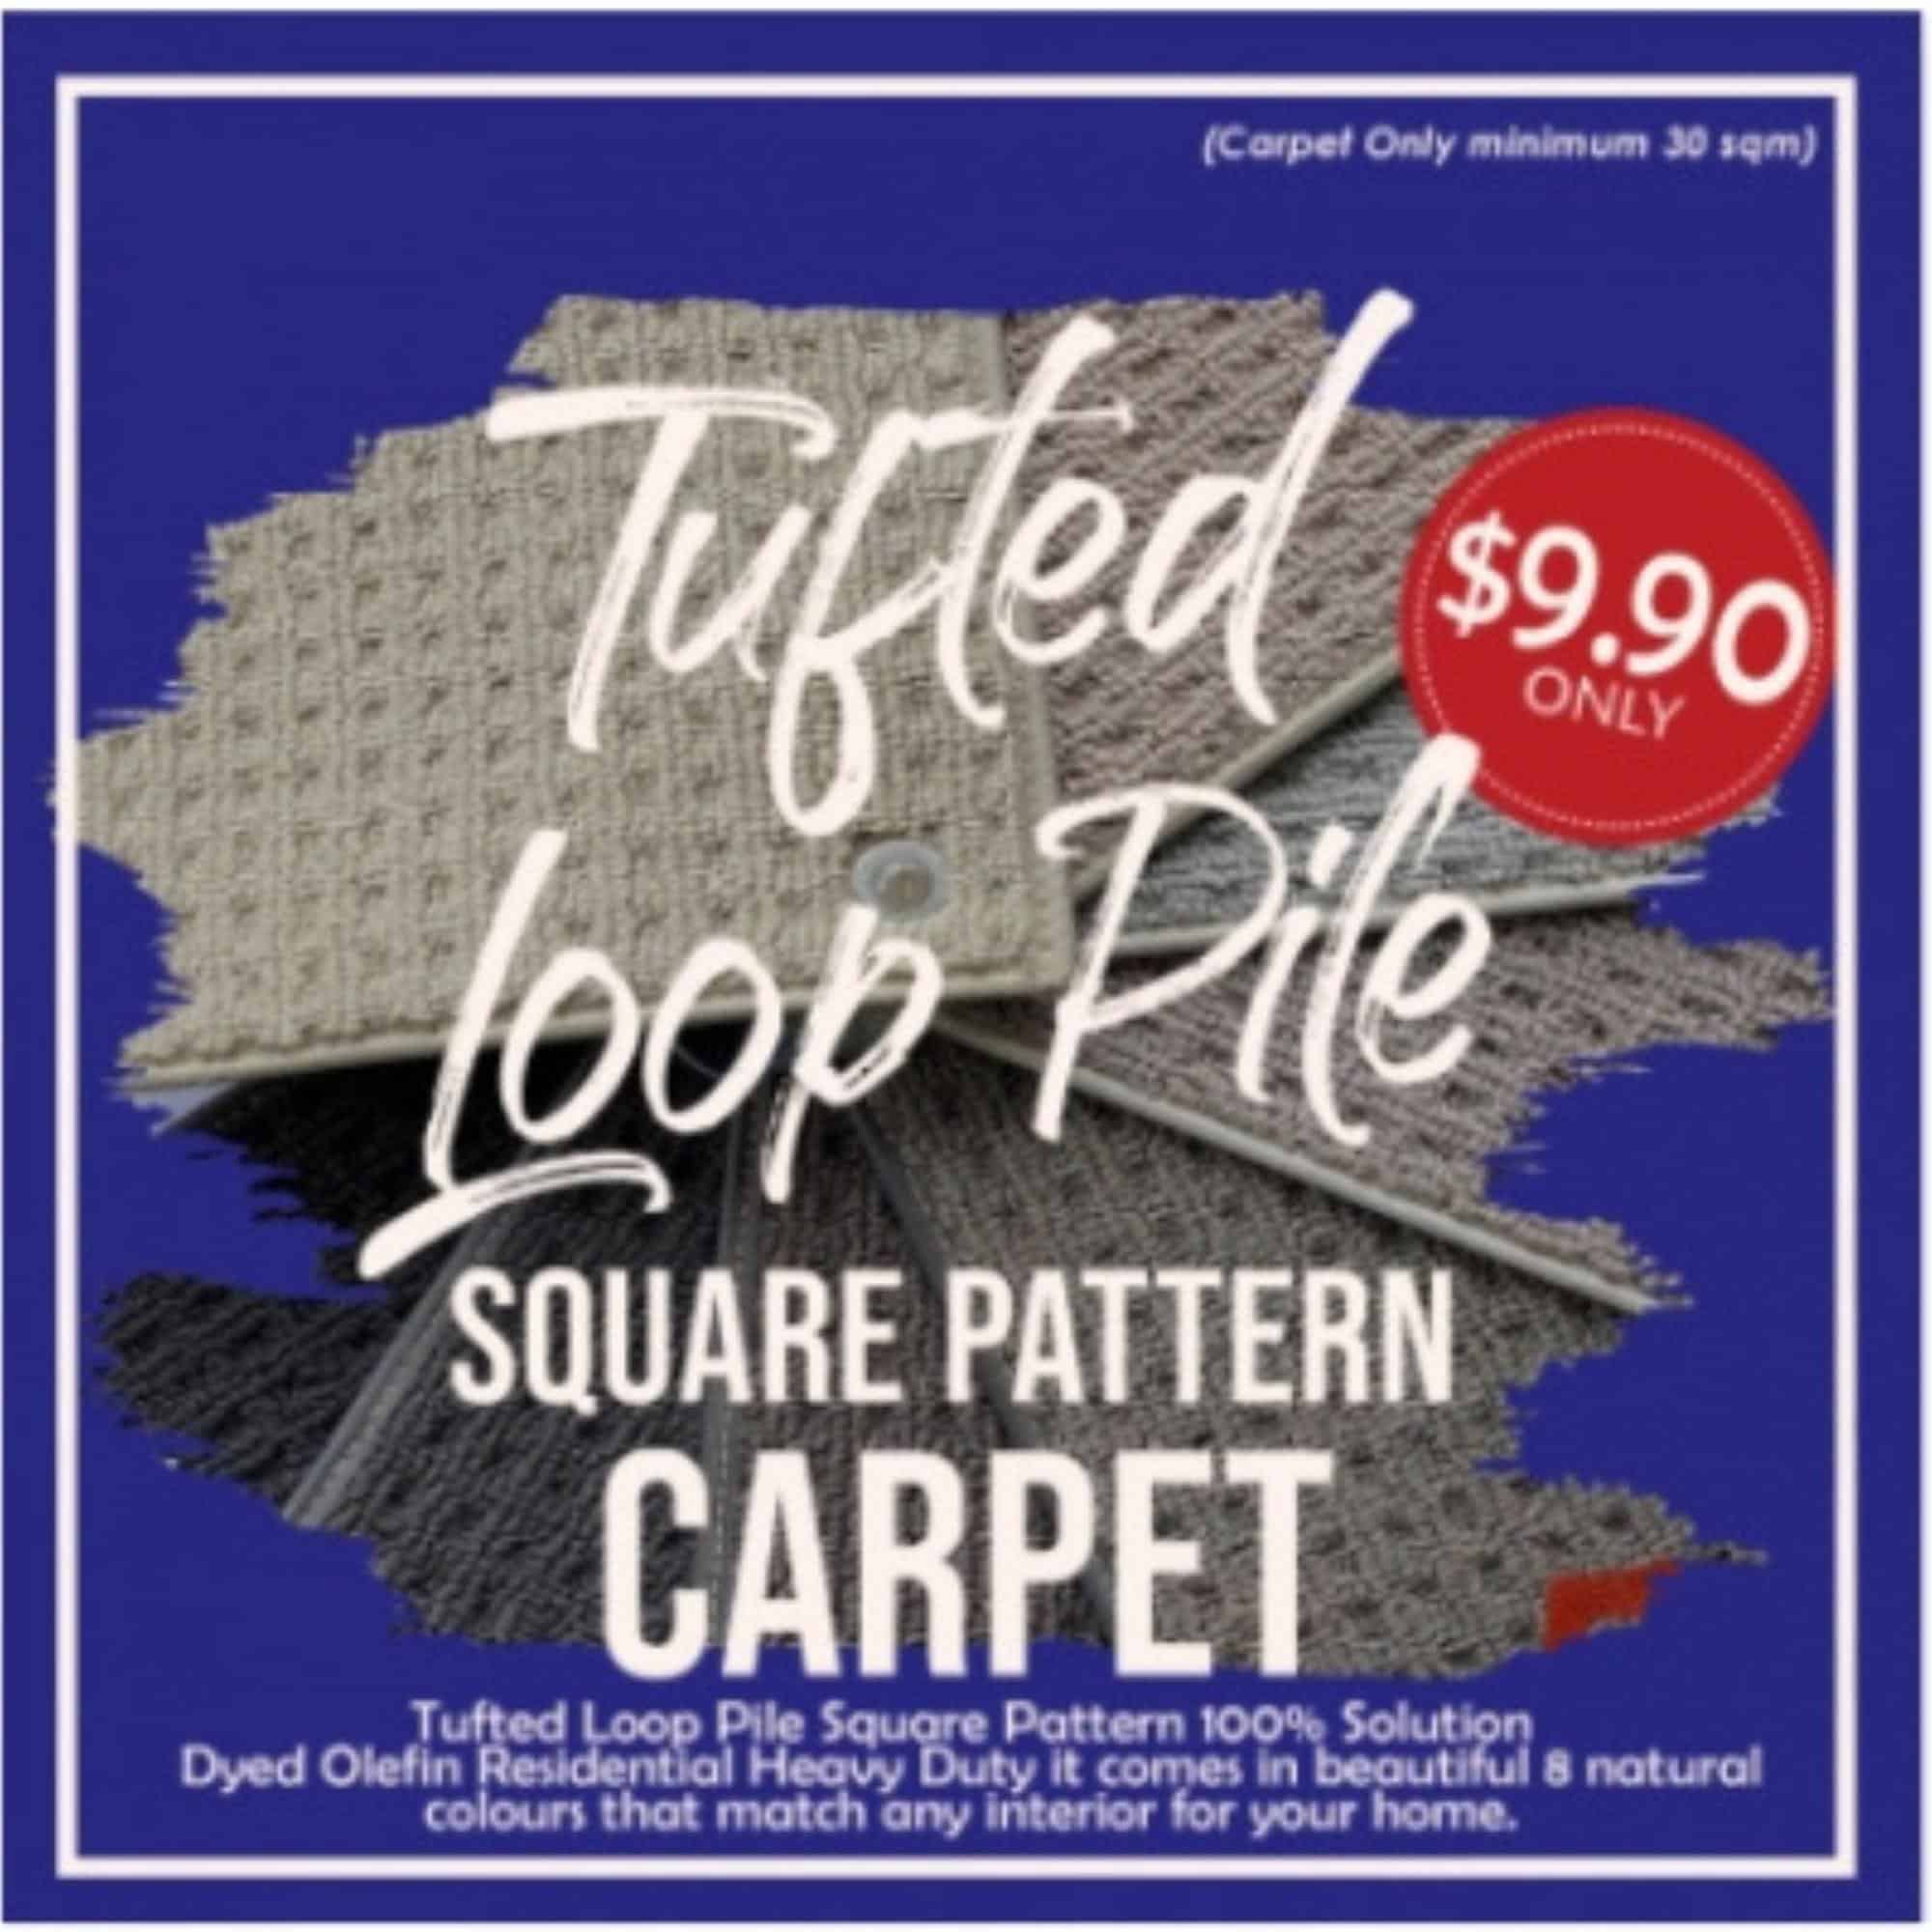 Image presents Vinyl Flooring and square pattern carpet